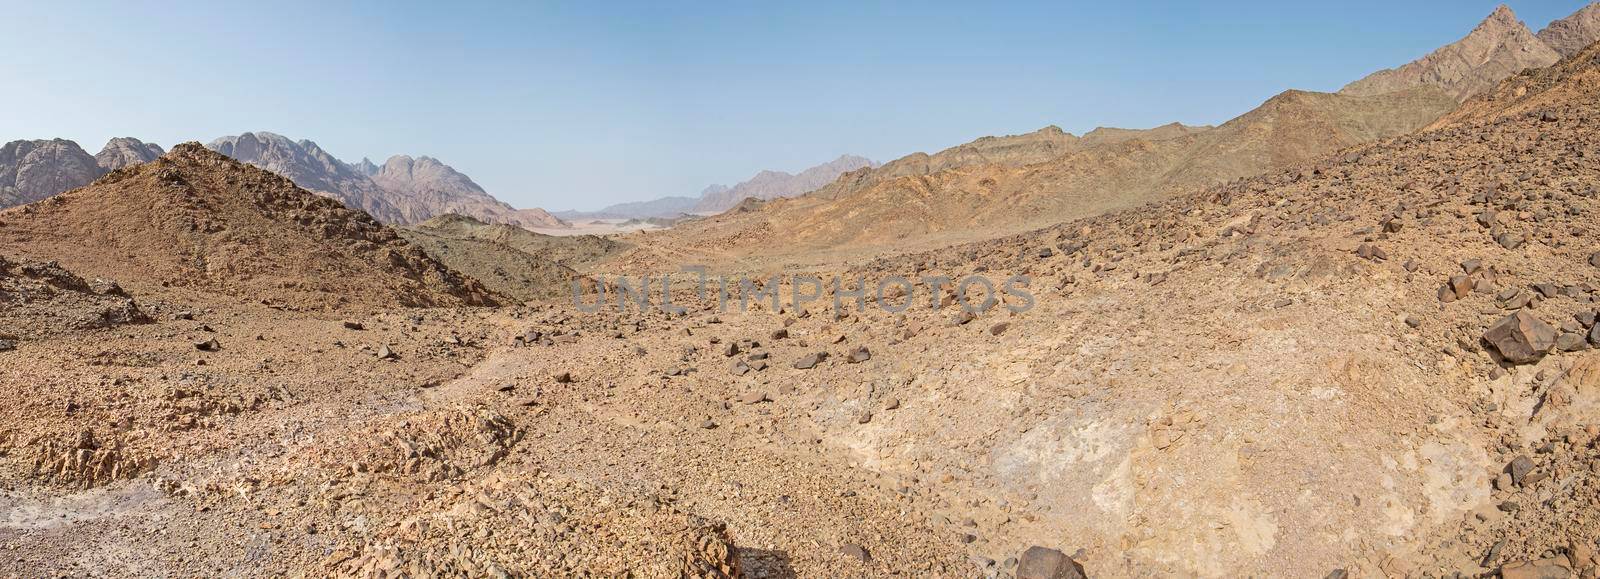 Rocky mountain slope landscape panorama in an arid desert environment